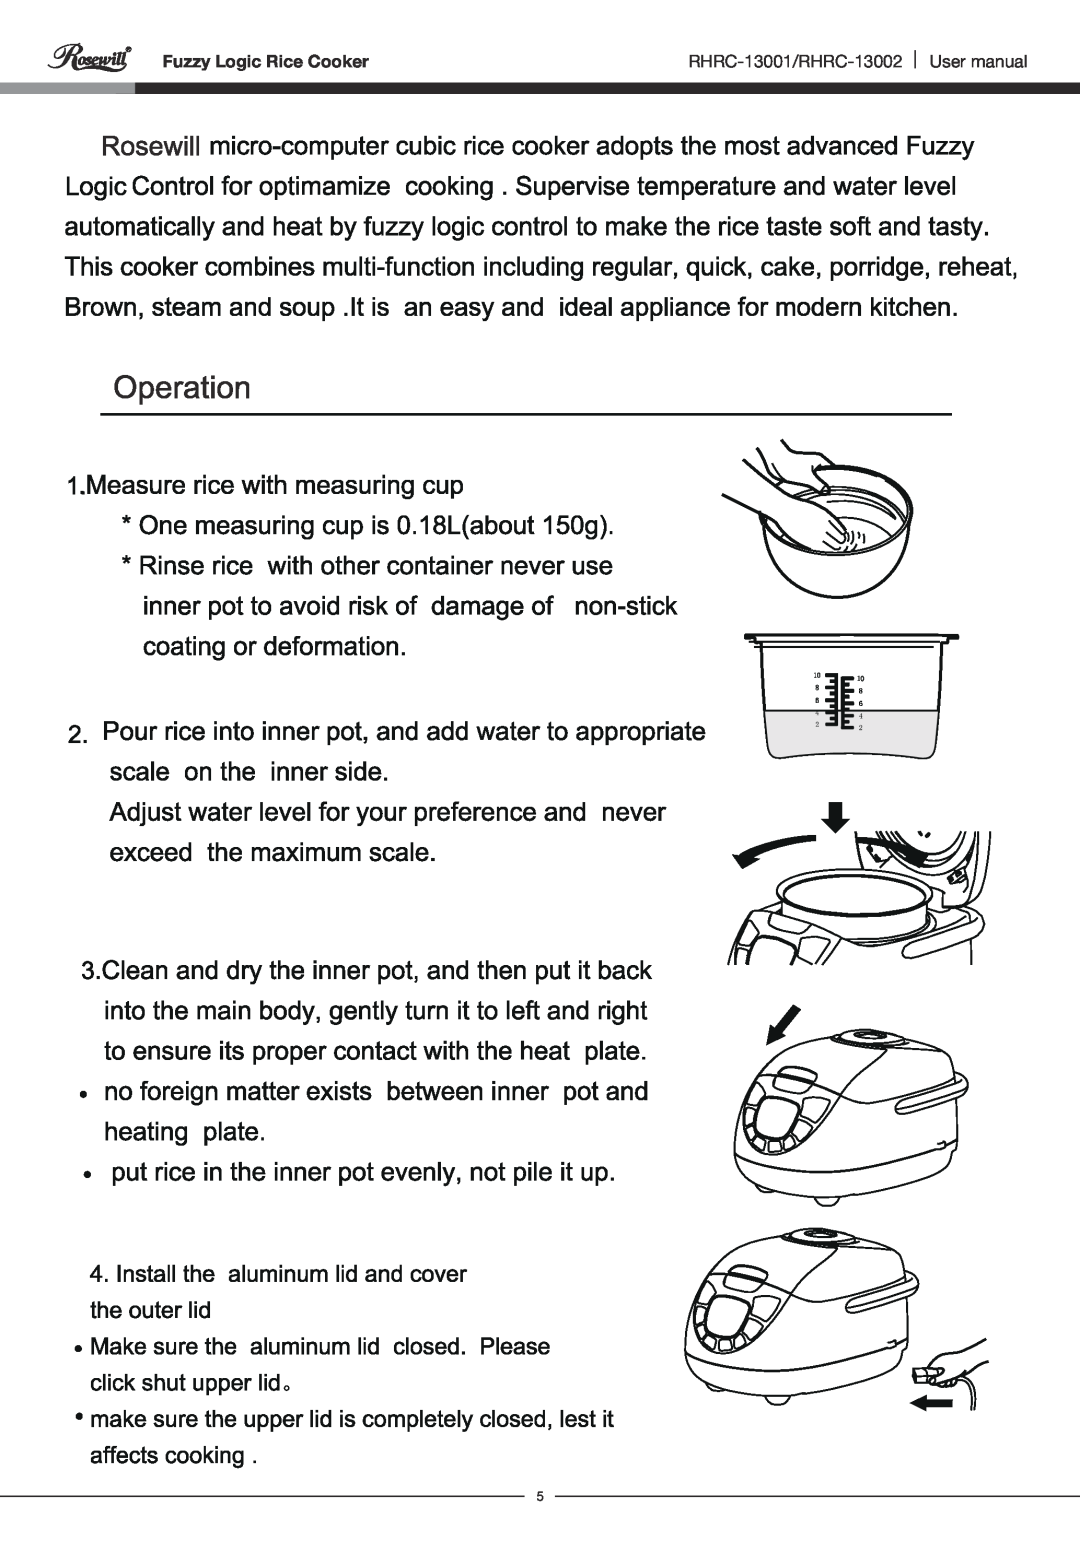 Rosewill user manual Fuzzy Logic Rice Cooker, RHRC-13001/RHRC-13002 